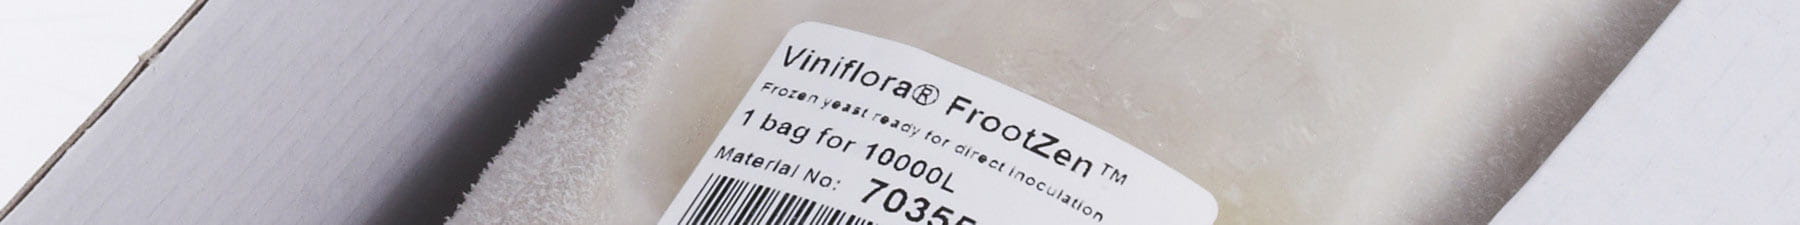 Viniflora FoootZen package in box